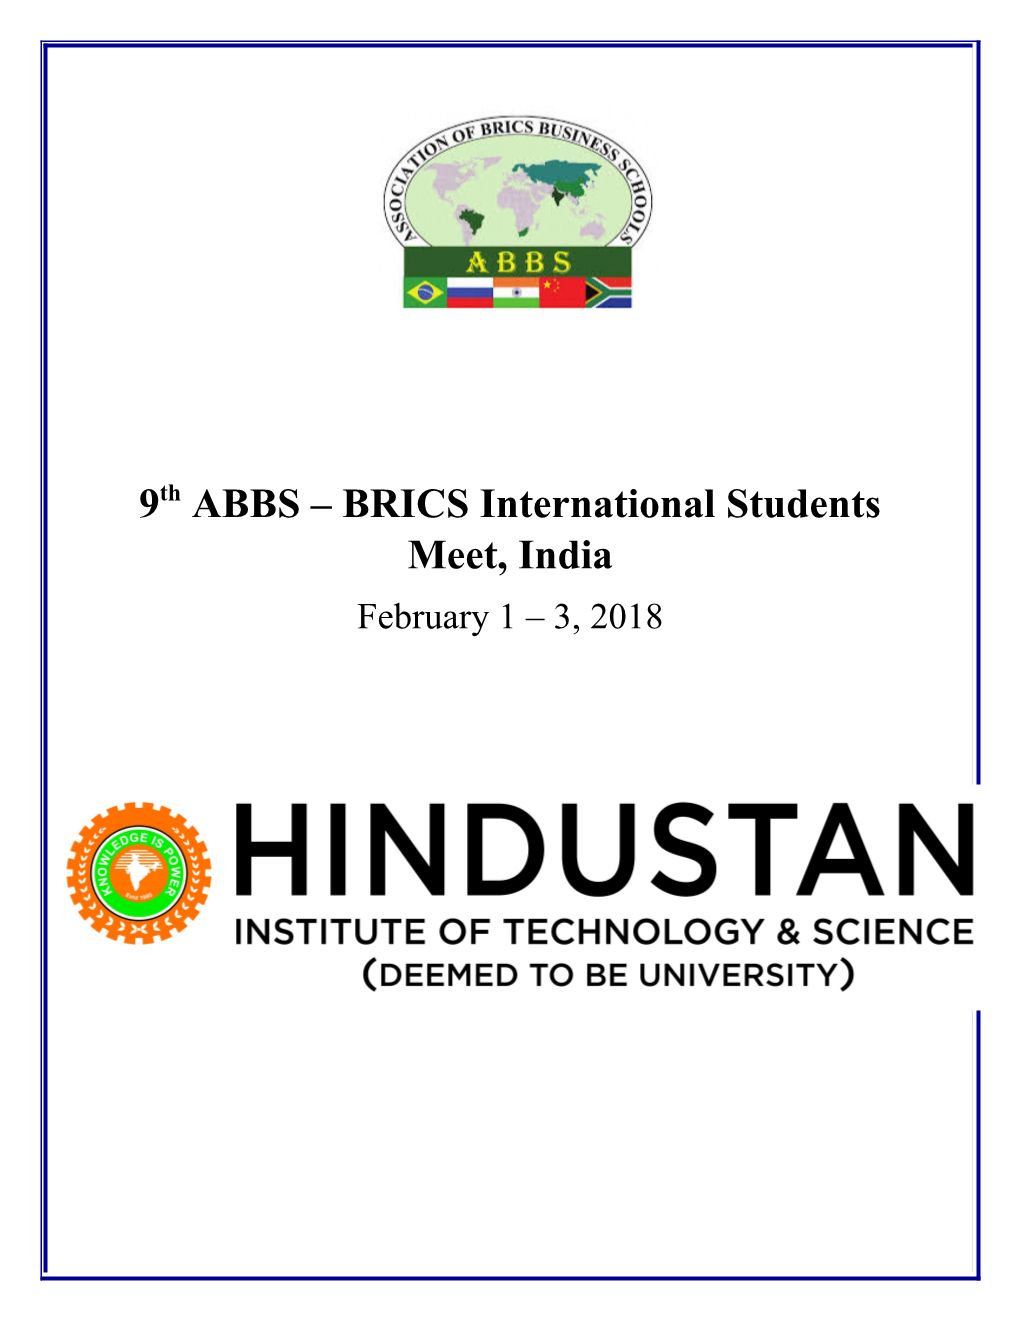 9Thabbs BRICS International Students Meet, India